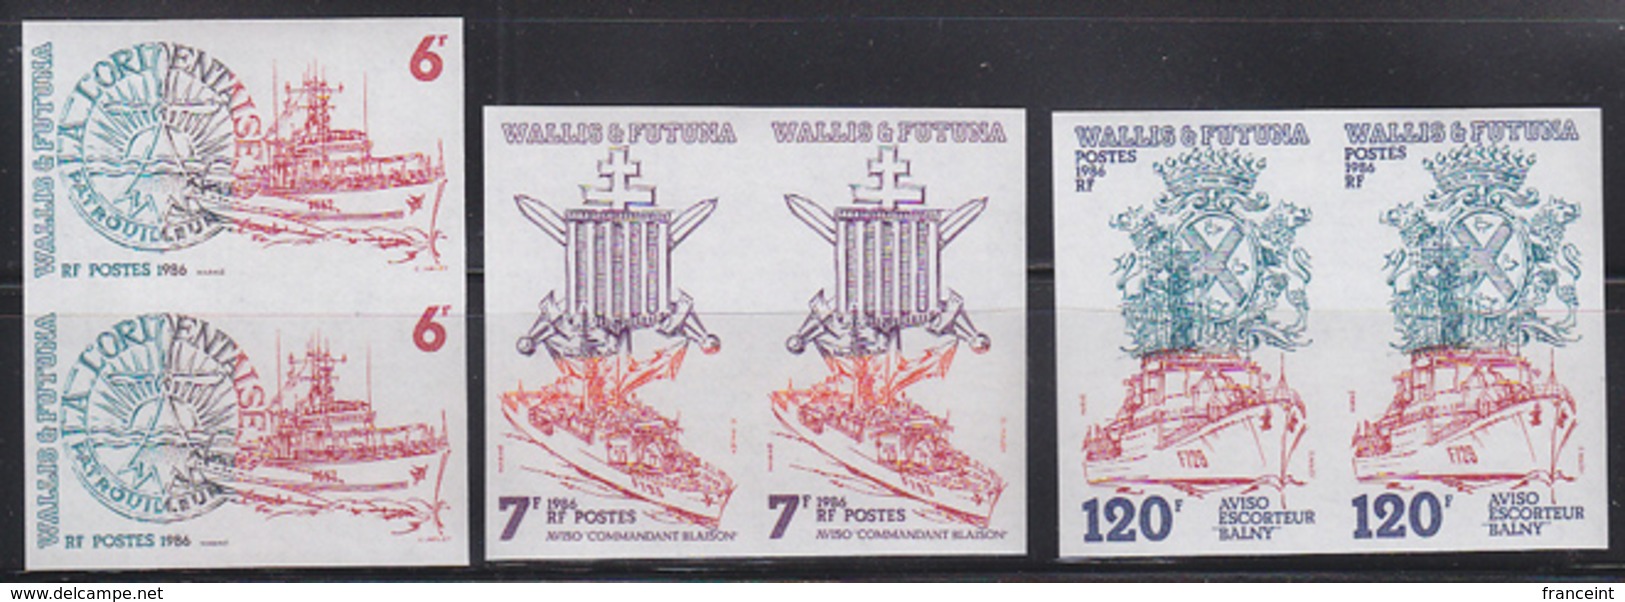 WALLIS & FUTUNA (1986) Ships. Set Of 3 Imperforate Pairs. Scott Nos 343-2, Yvert Nos 348-50. - Sin Dentar, Pruebas De Impresión Y Variedades